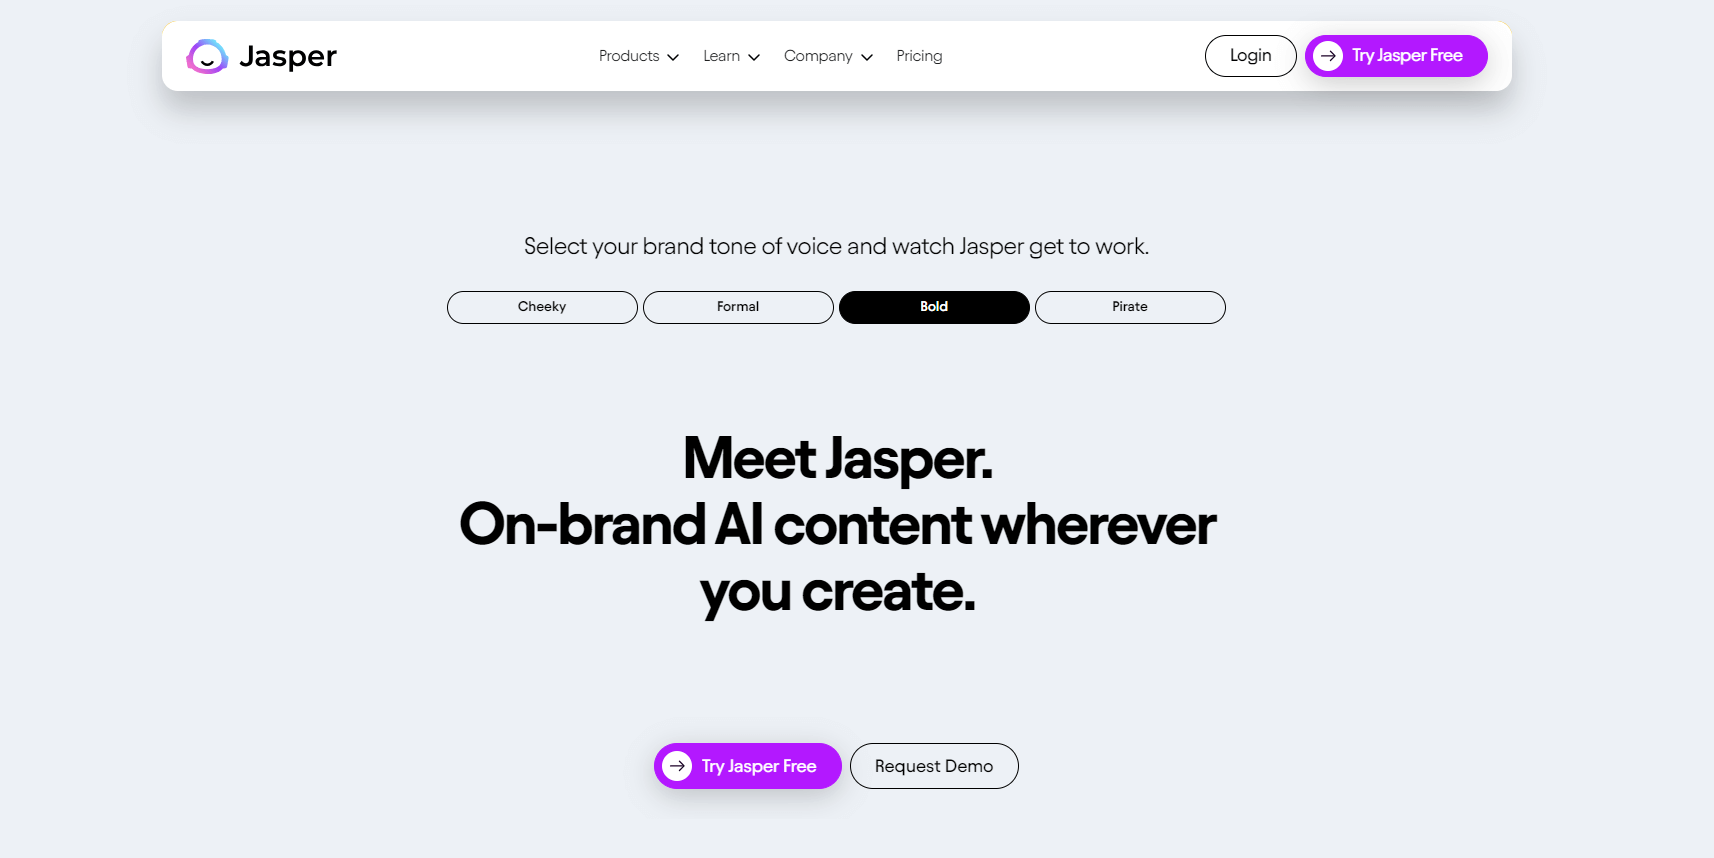 Jasper website screenshot redemption coupon code on site